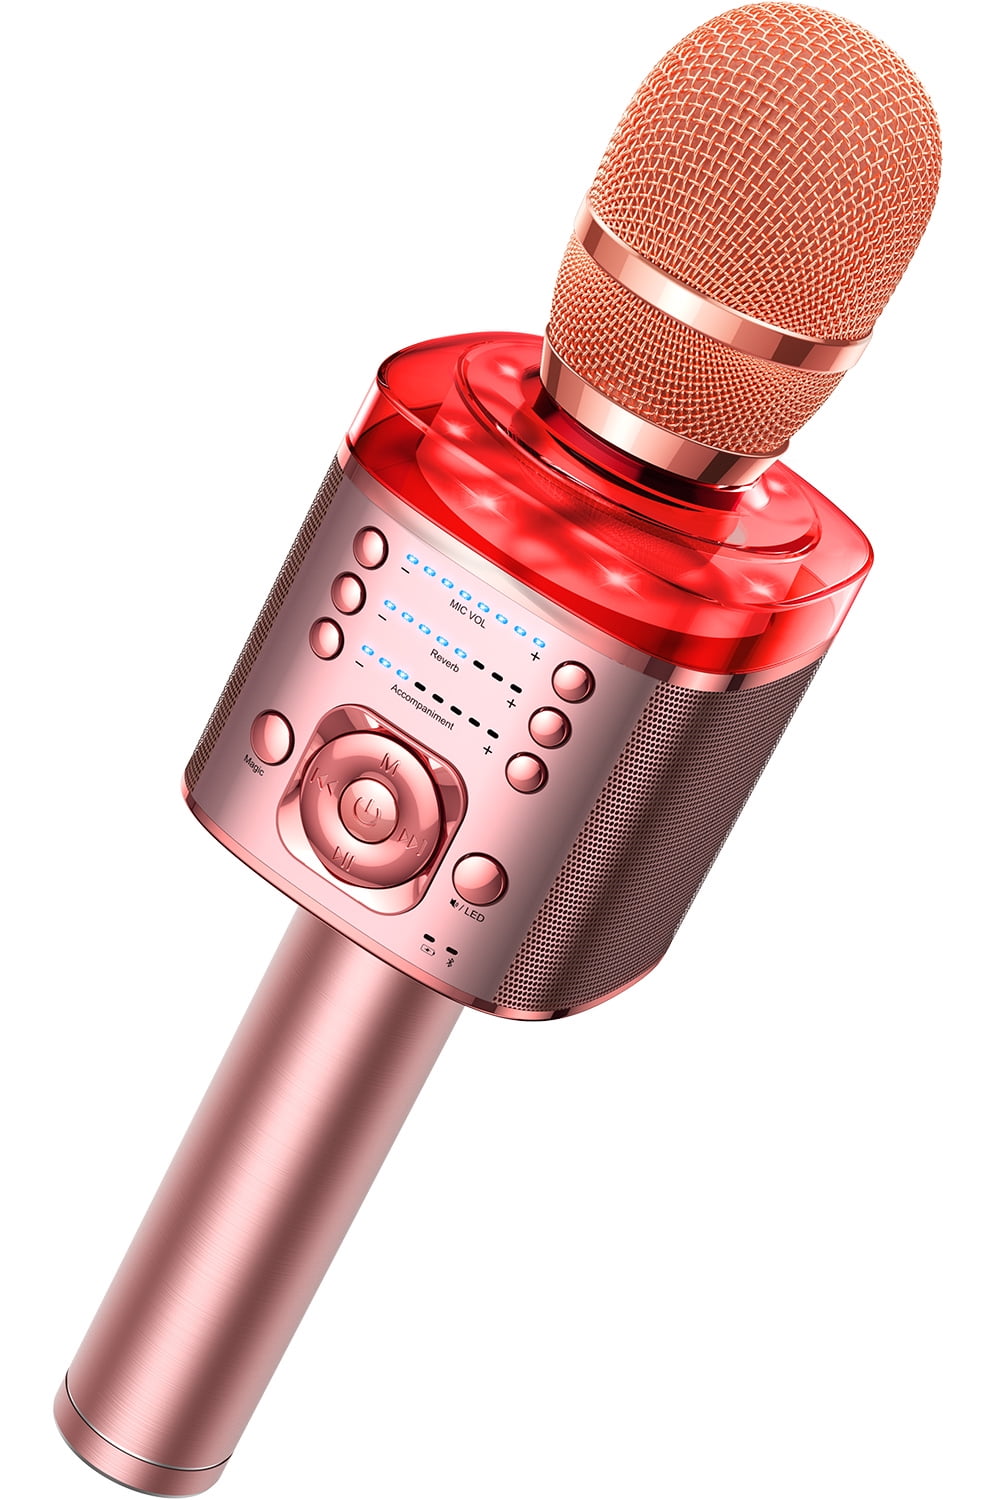 Ledeez Wireless Bluetooth LED Karaoke Microphone Set of 2, Pink 